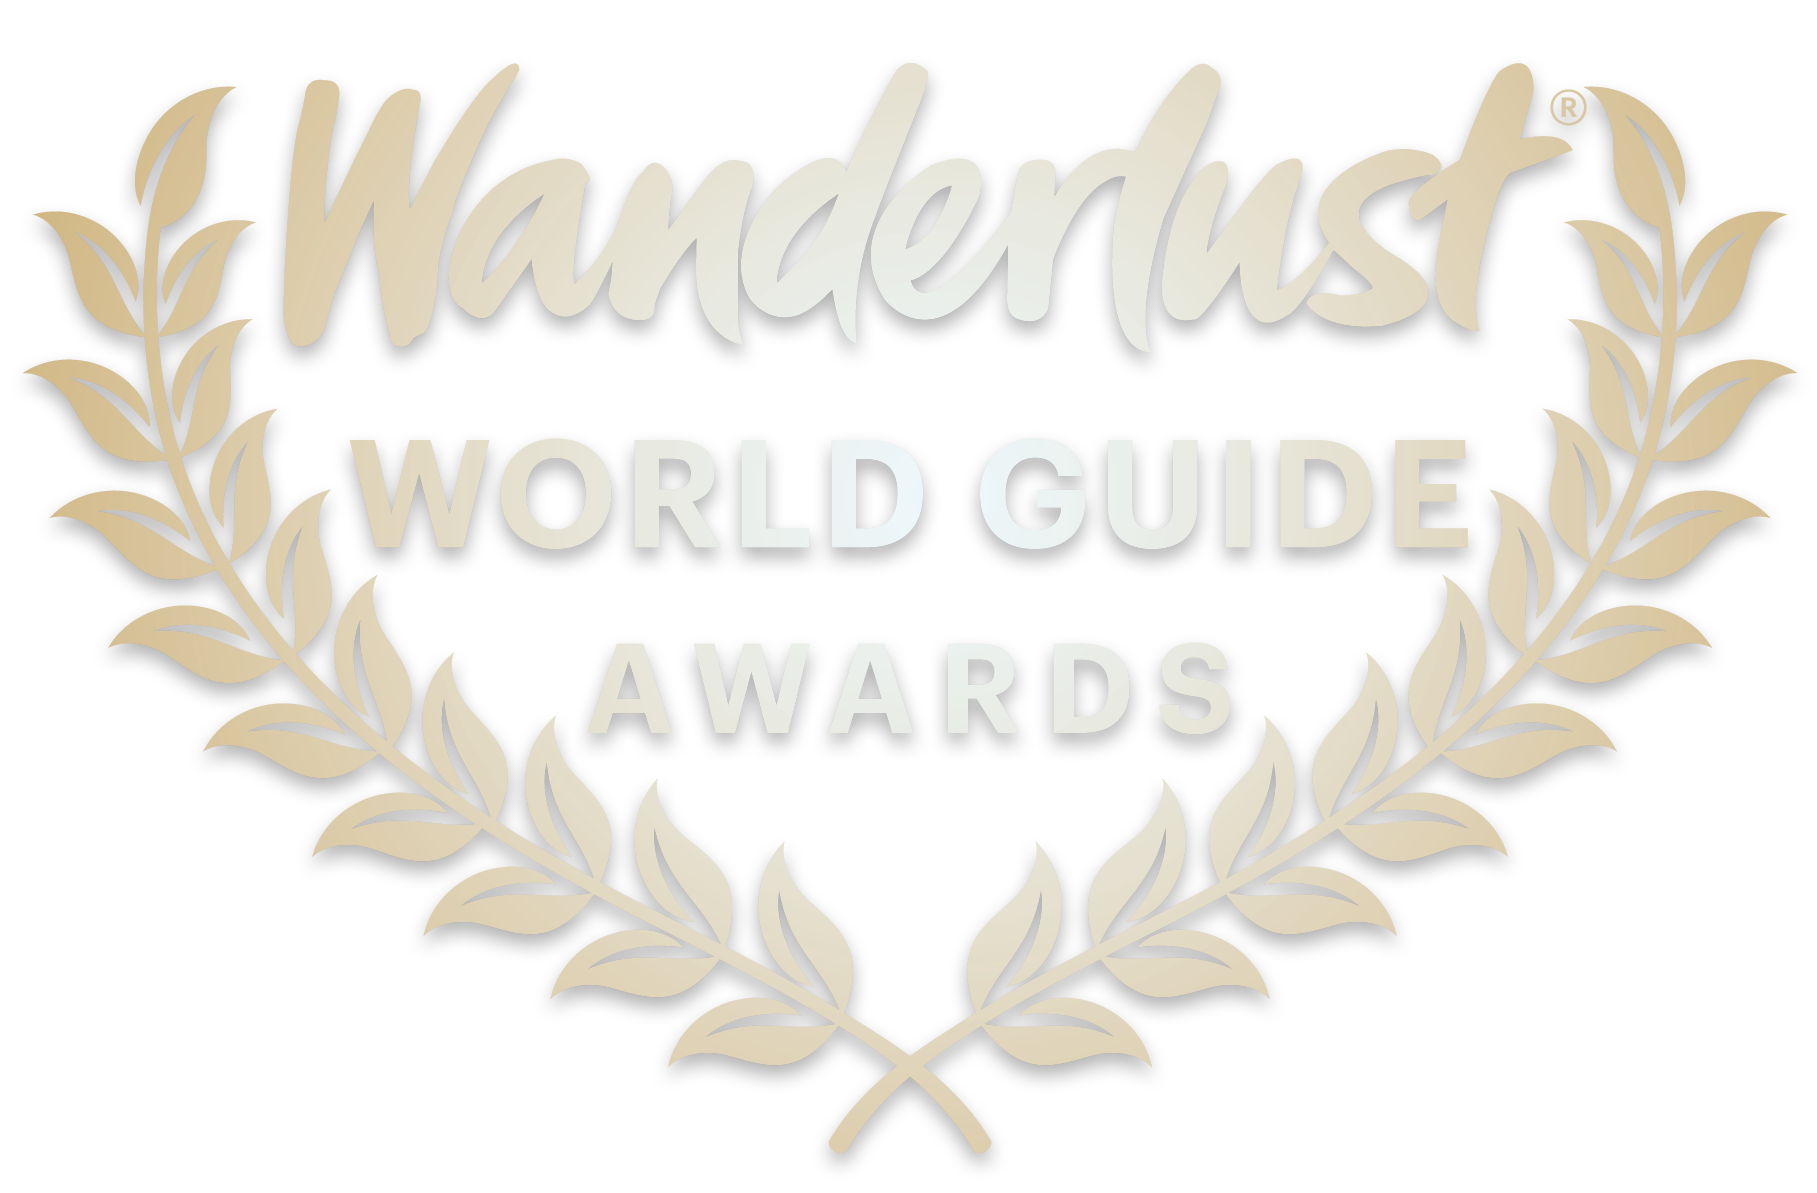 wanderlust travel awards 2023